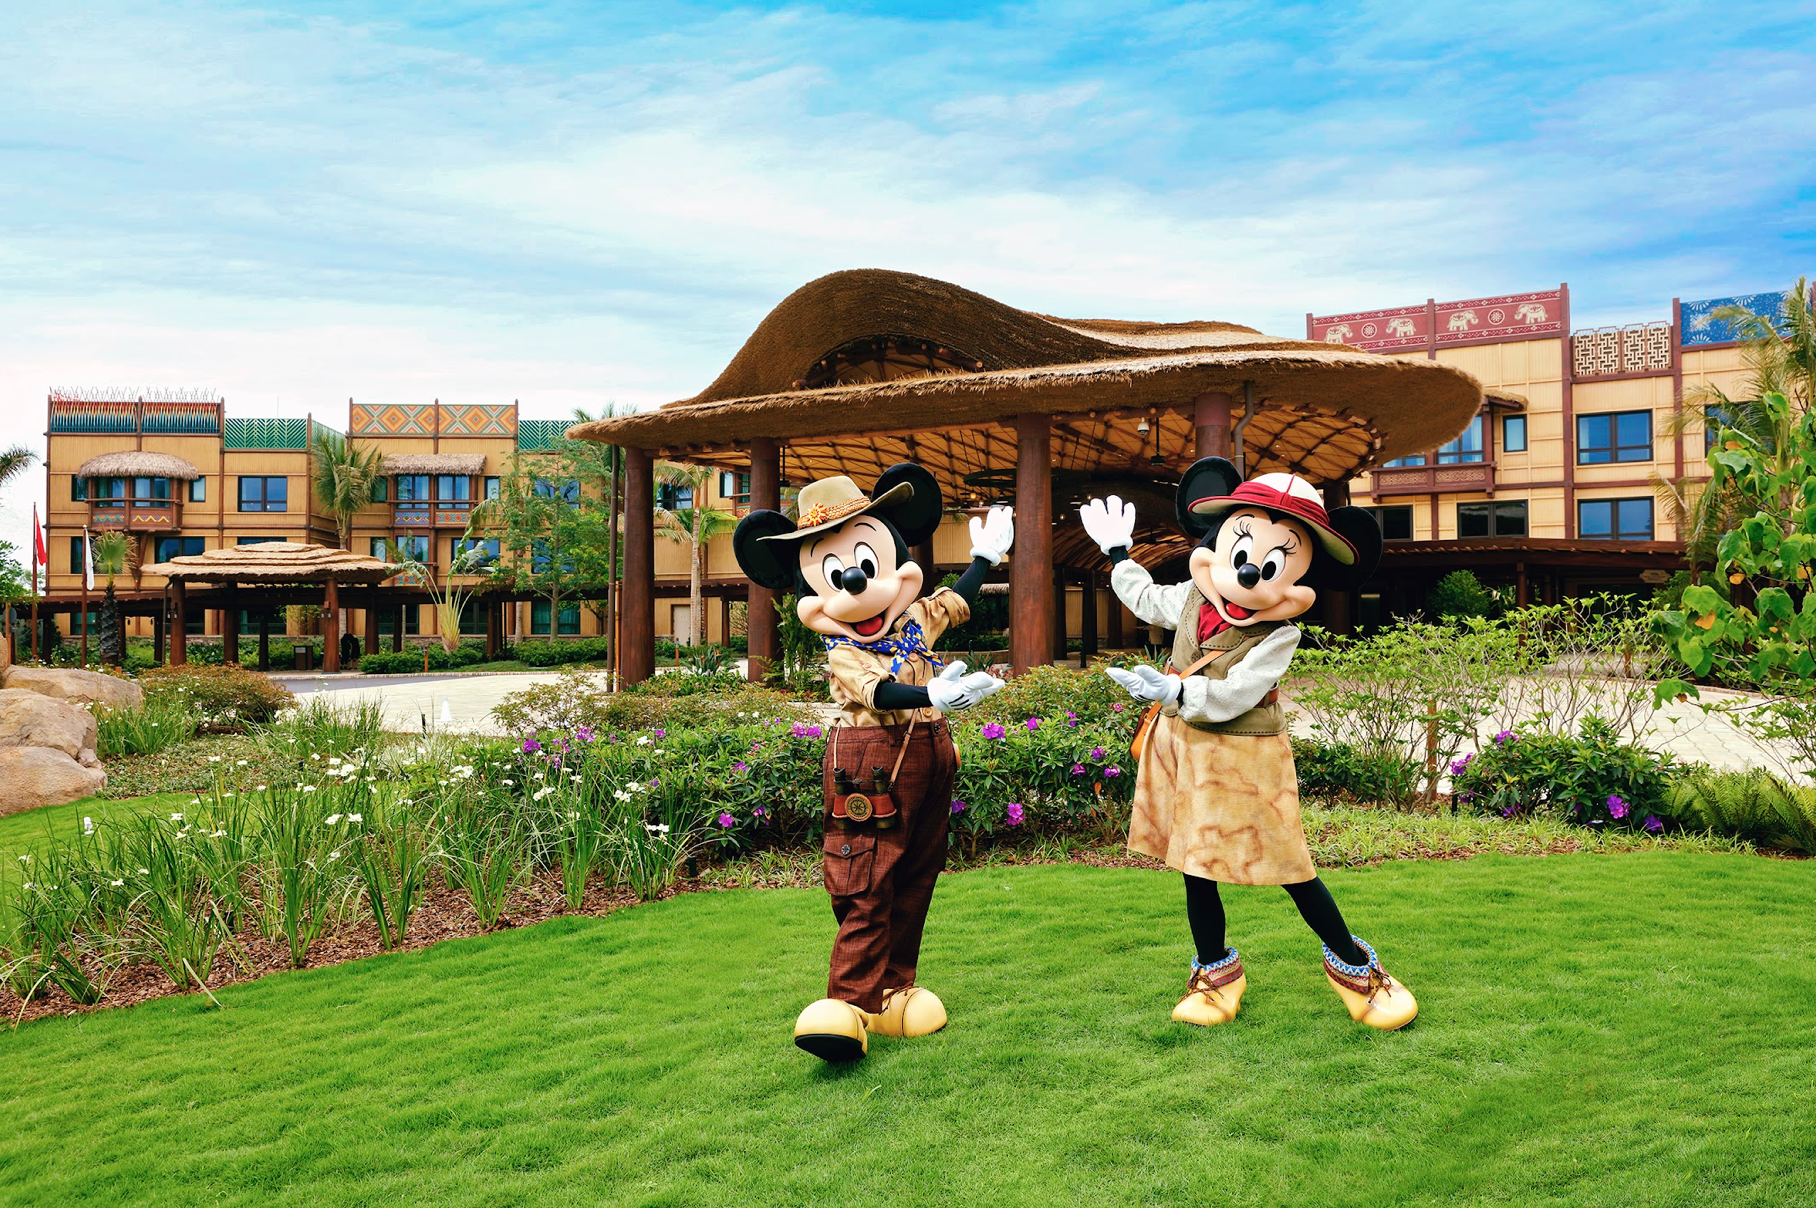 迪士尼探索家度假酒店- staycation-Hong Kong Disneyland-staycation-disney hotel staycation